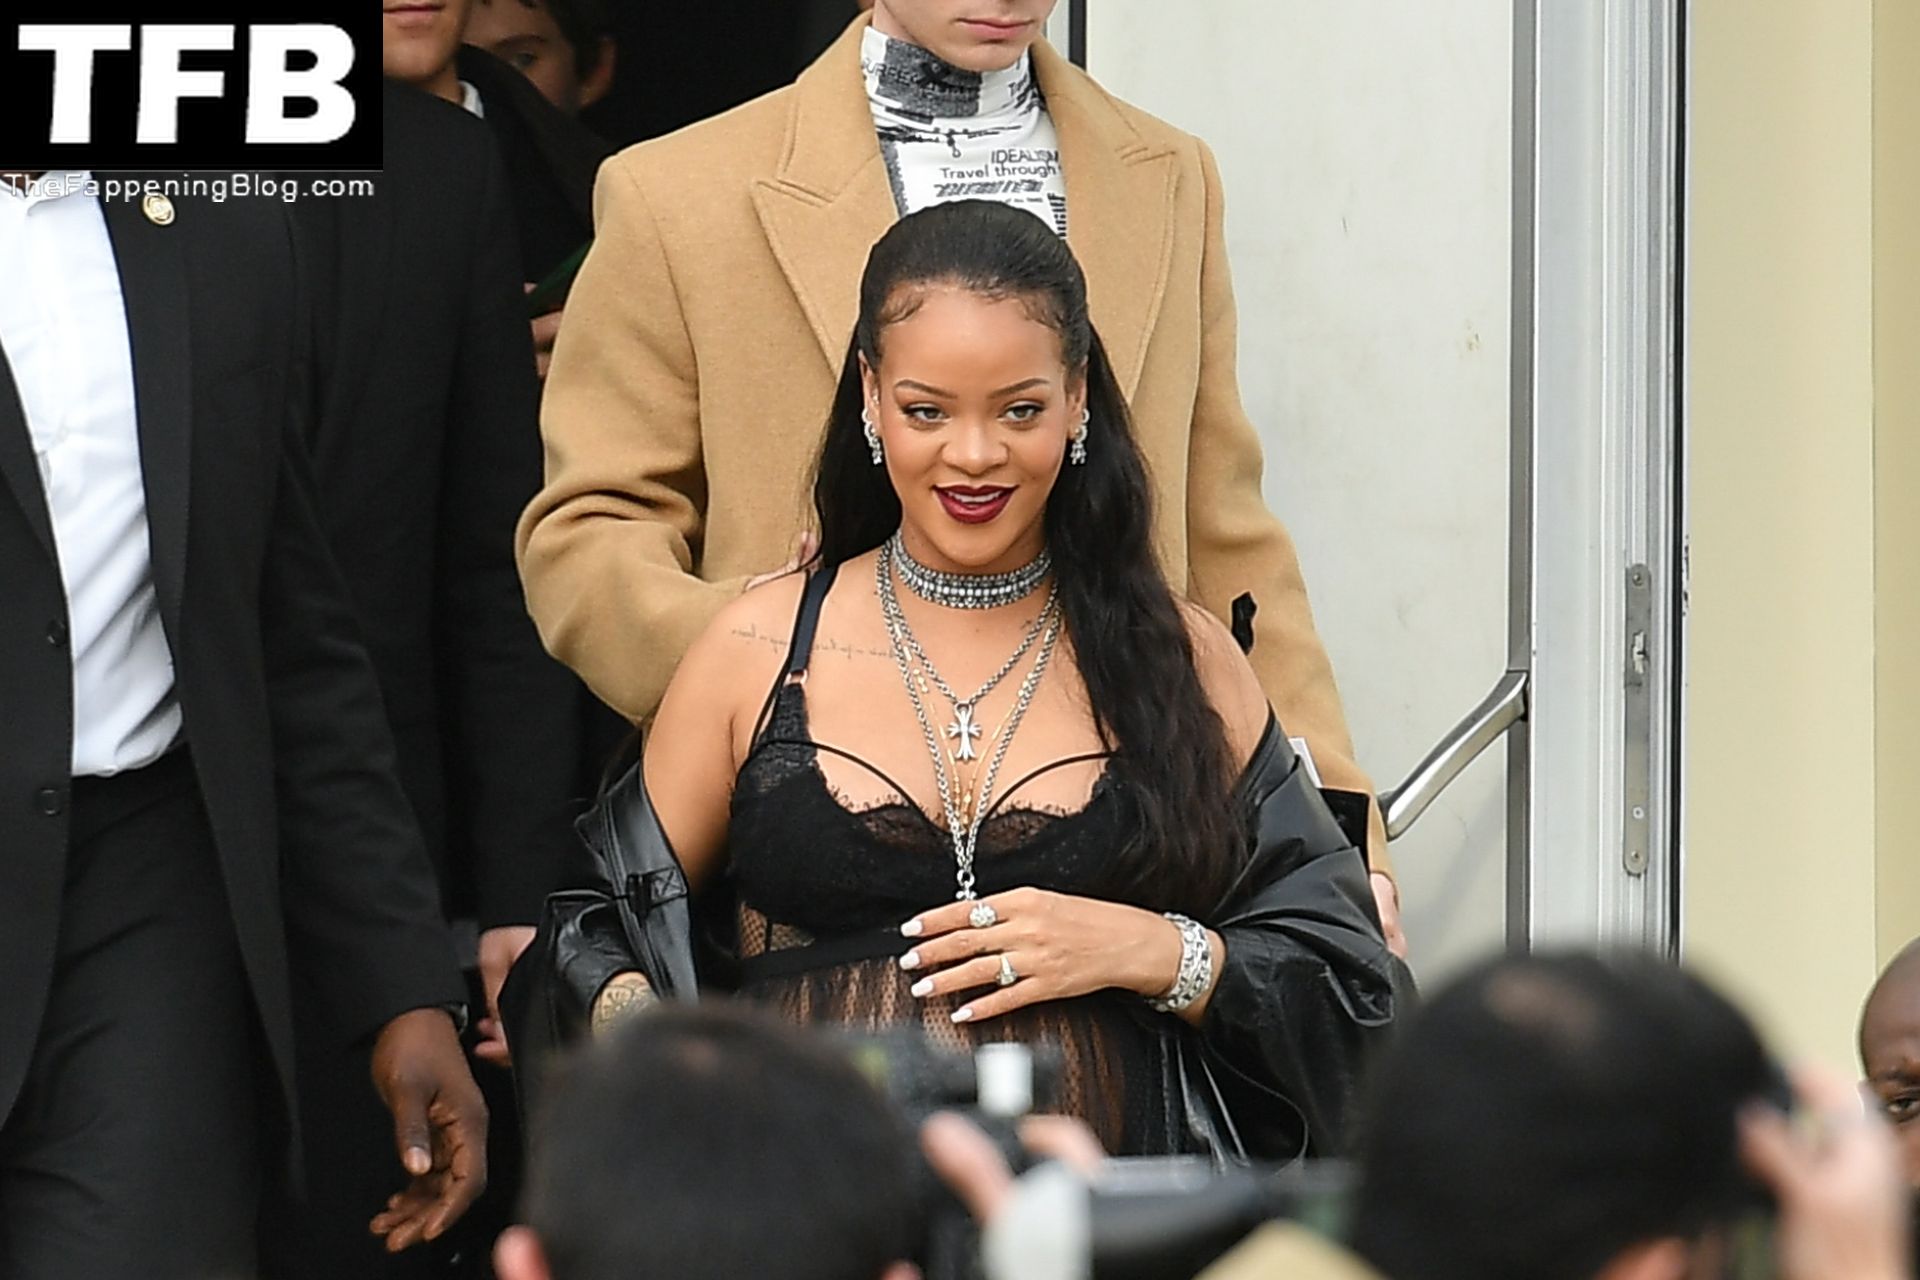 Rihanna-Sexy-The-Fappening-Blog-87.jpg